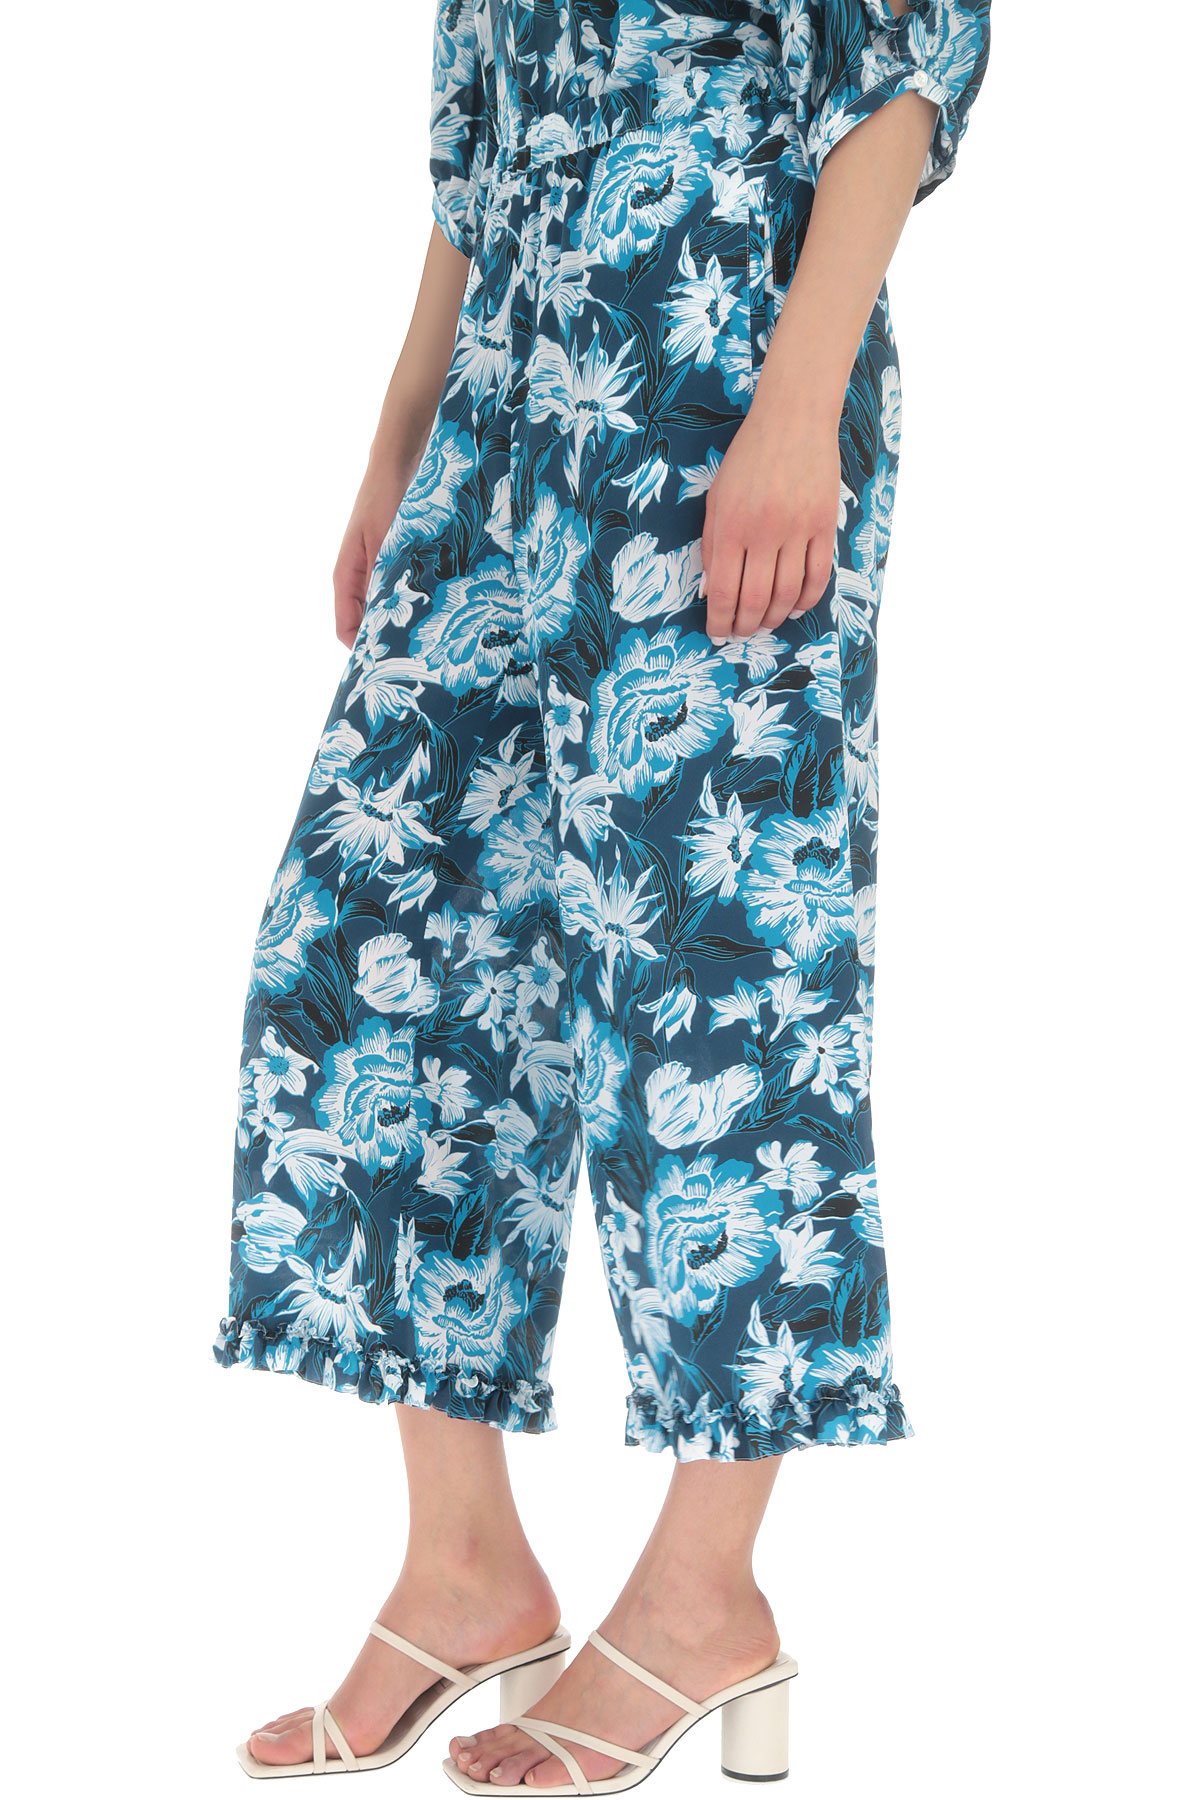 Womens Clothing Max Mara, Style code: 51310115000-dresda-003